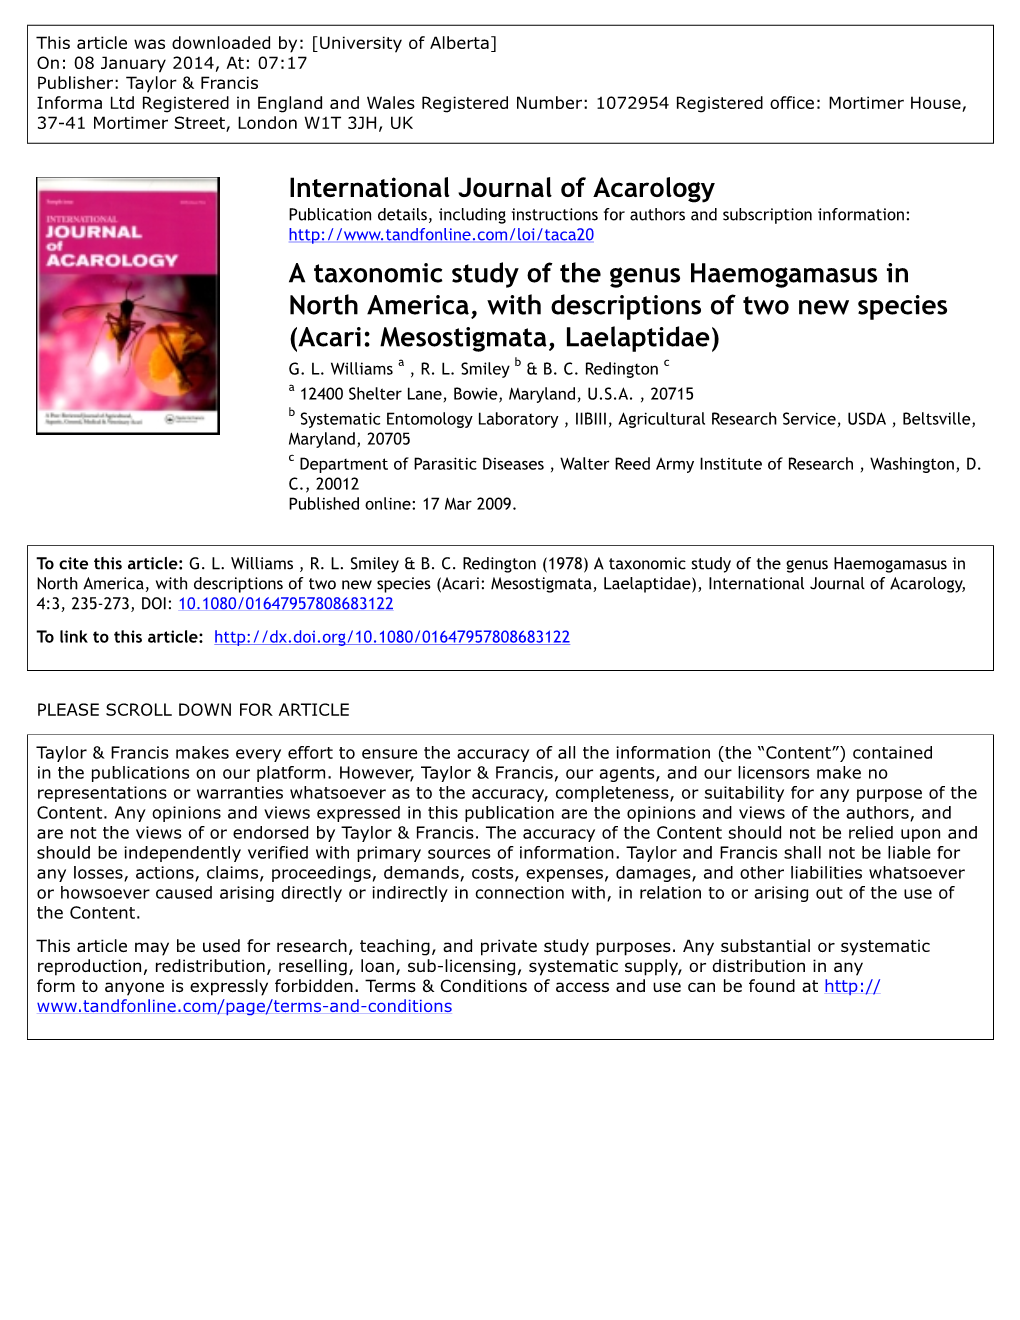 International Journal of Acarology a Taxonomic Study of the Genus